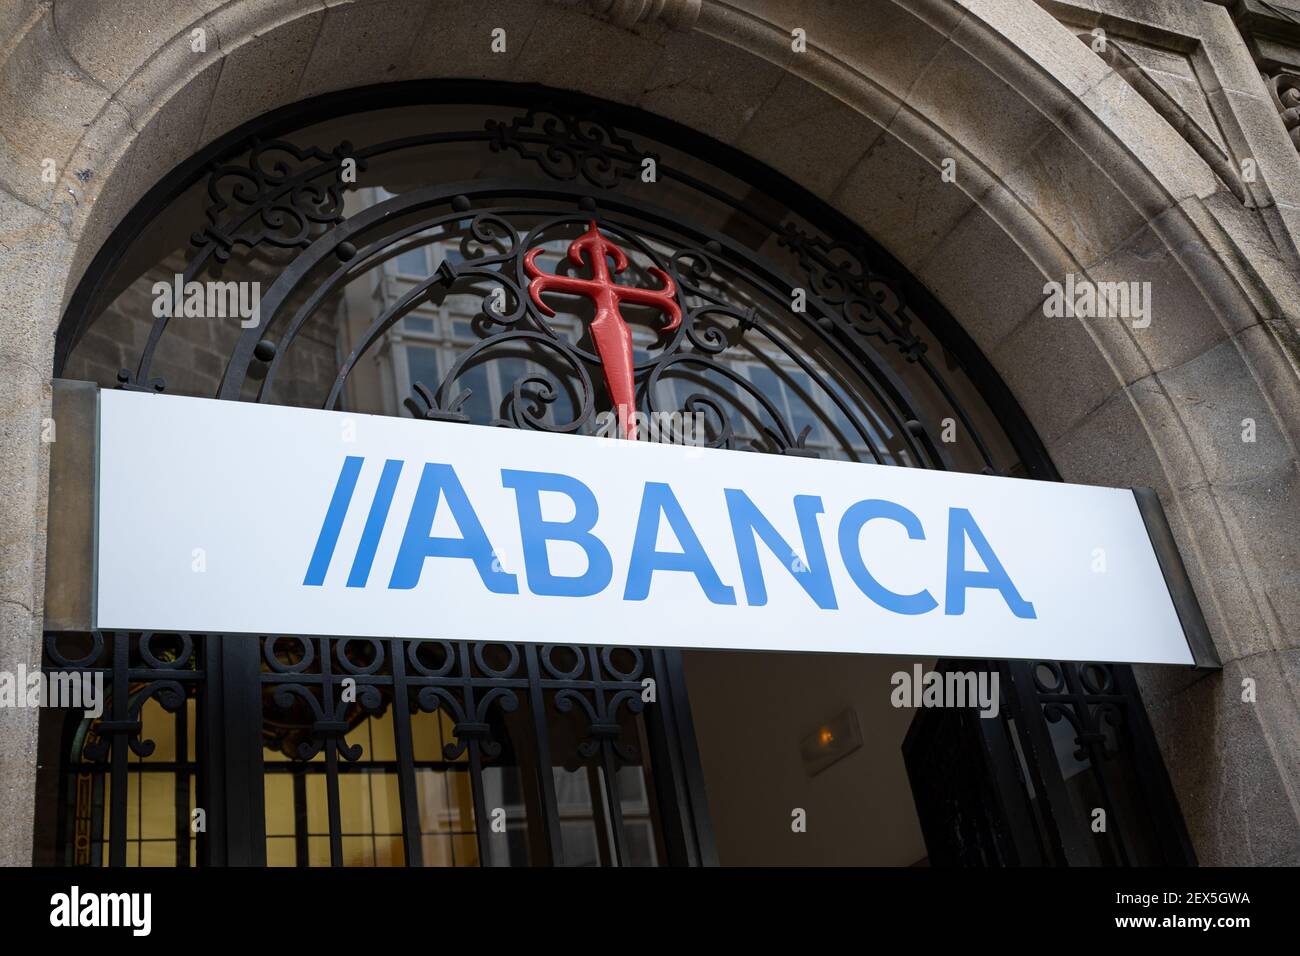 Santiago de Compostela Spain; march 03, 2021: Abanca bank sign on building facade of historic downtown of Santiago de Compostela, Spain Stock Photo